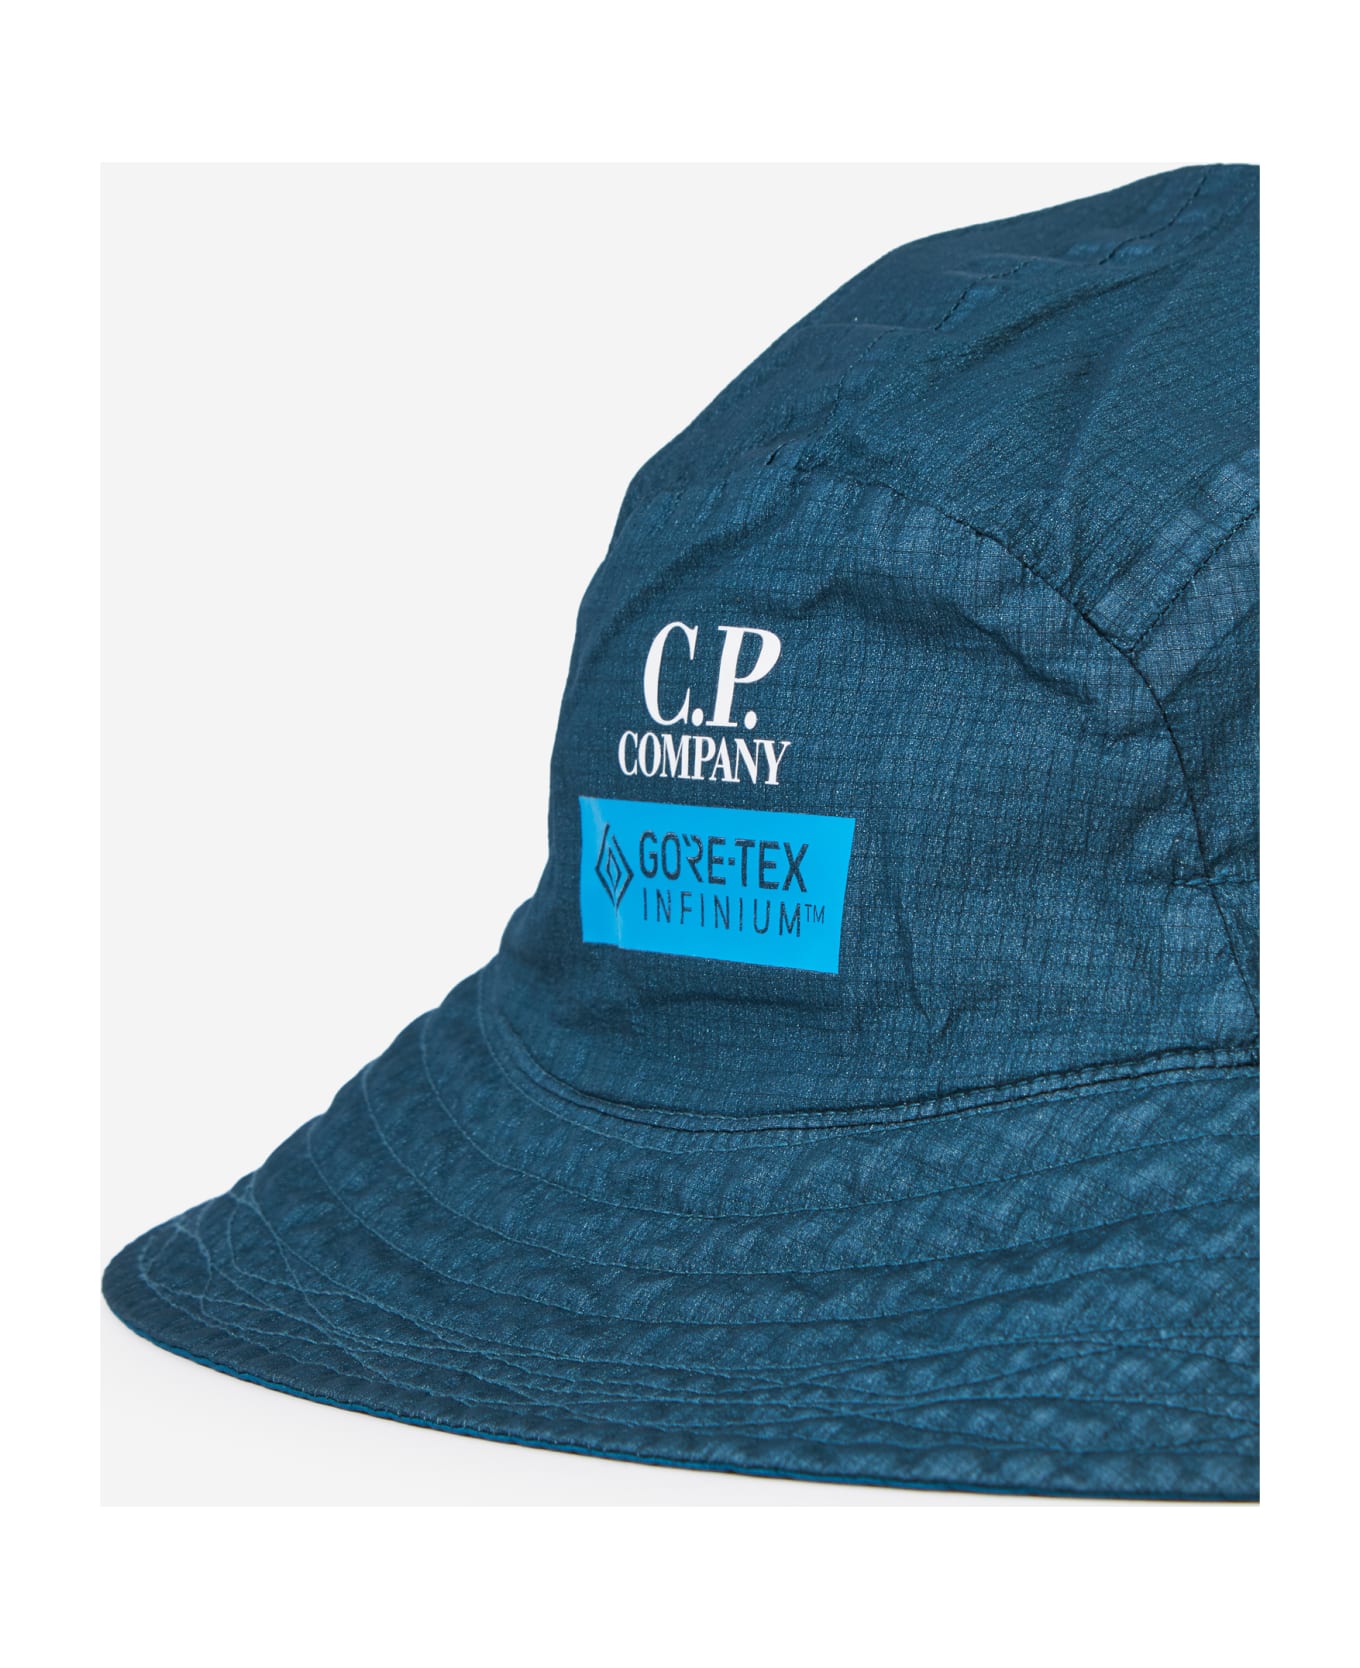 C.P. Company Hats - Cyan 帽子